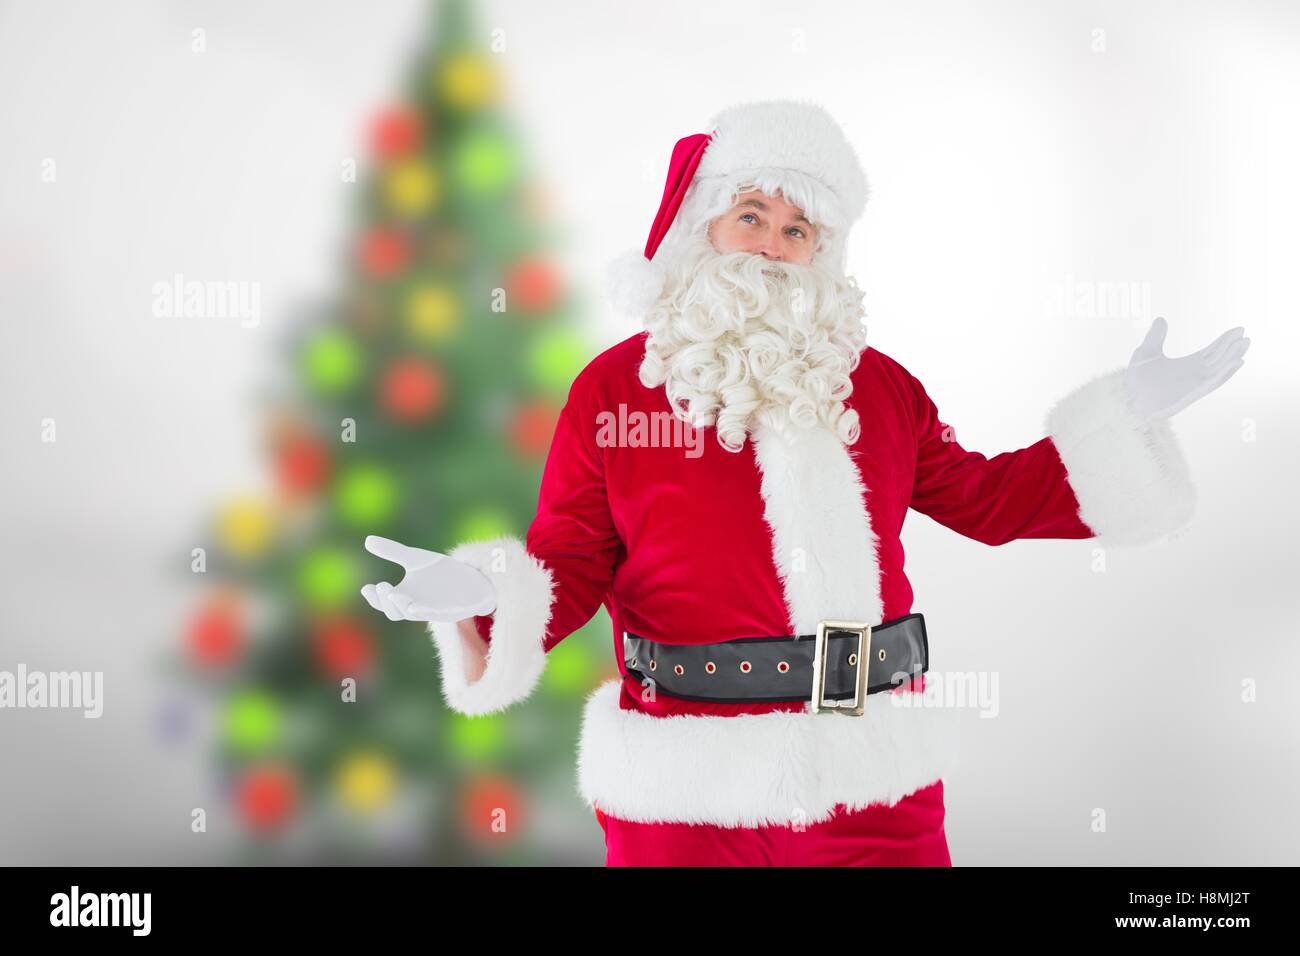 Santa claus gesturing against blur background Stock Photo